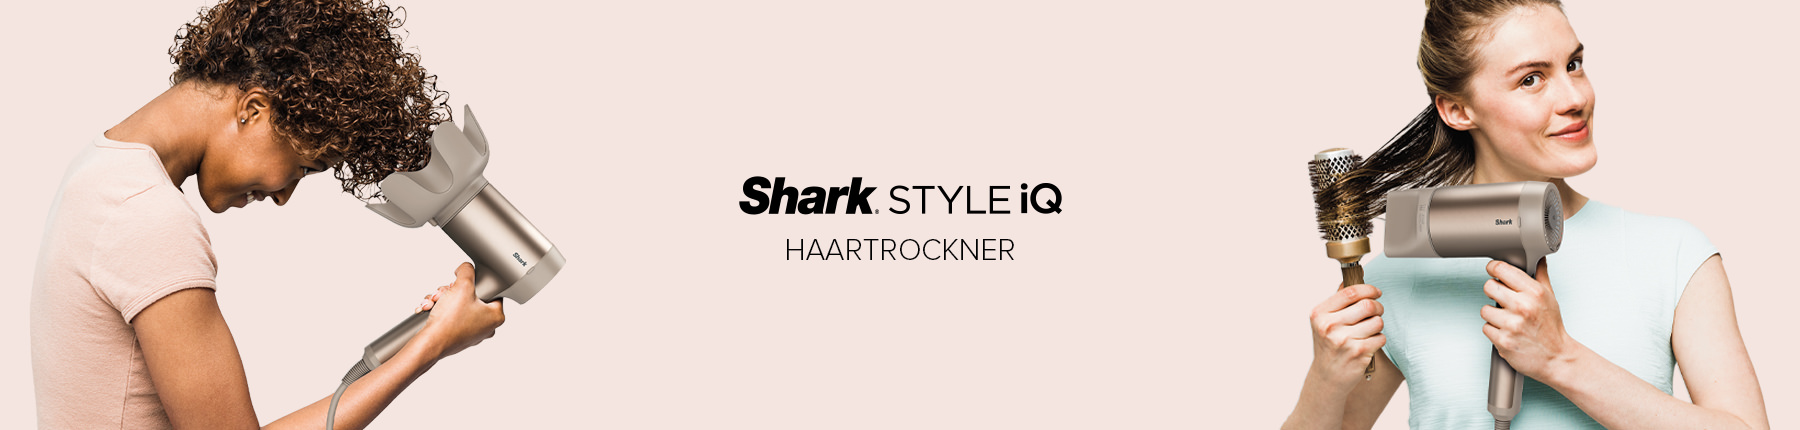 Haartrockner Shark 